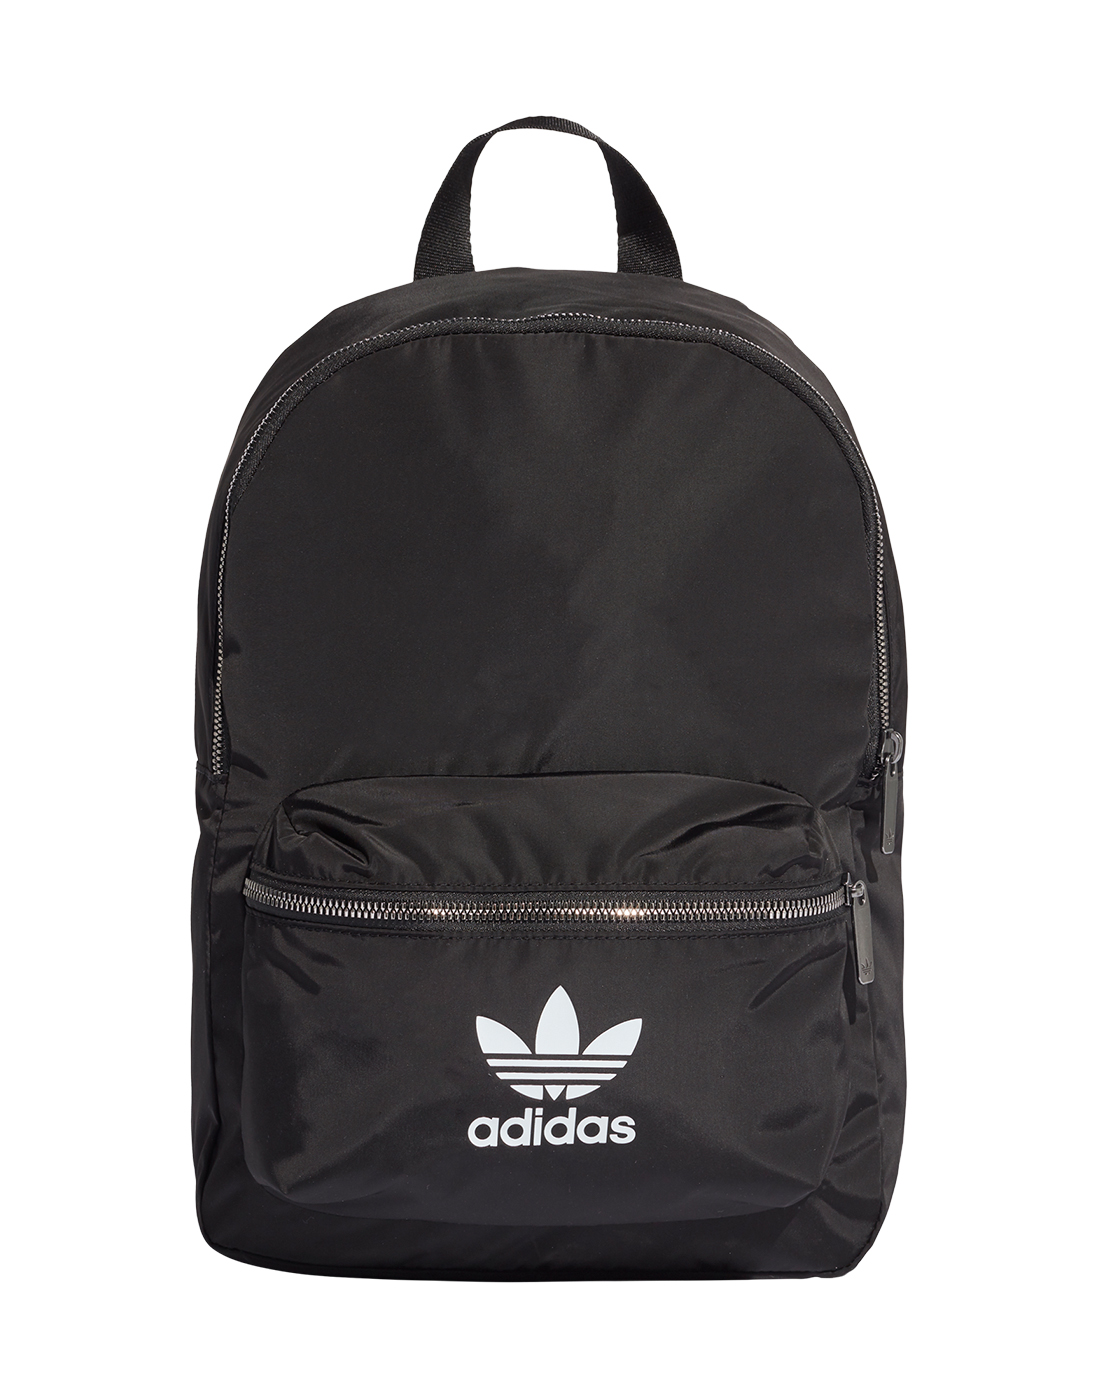 adidas classic trefoil backpack black